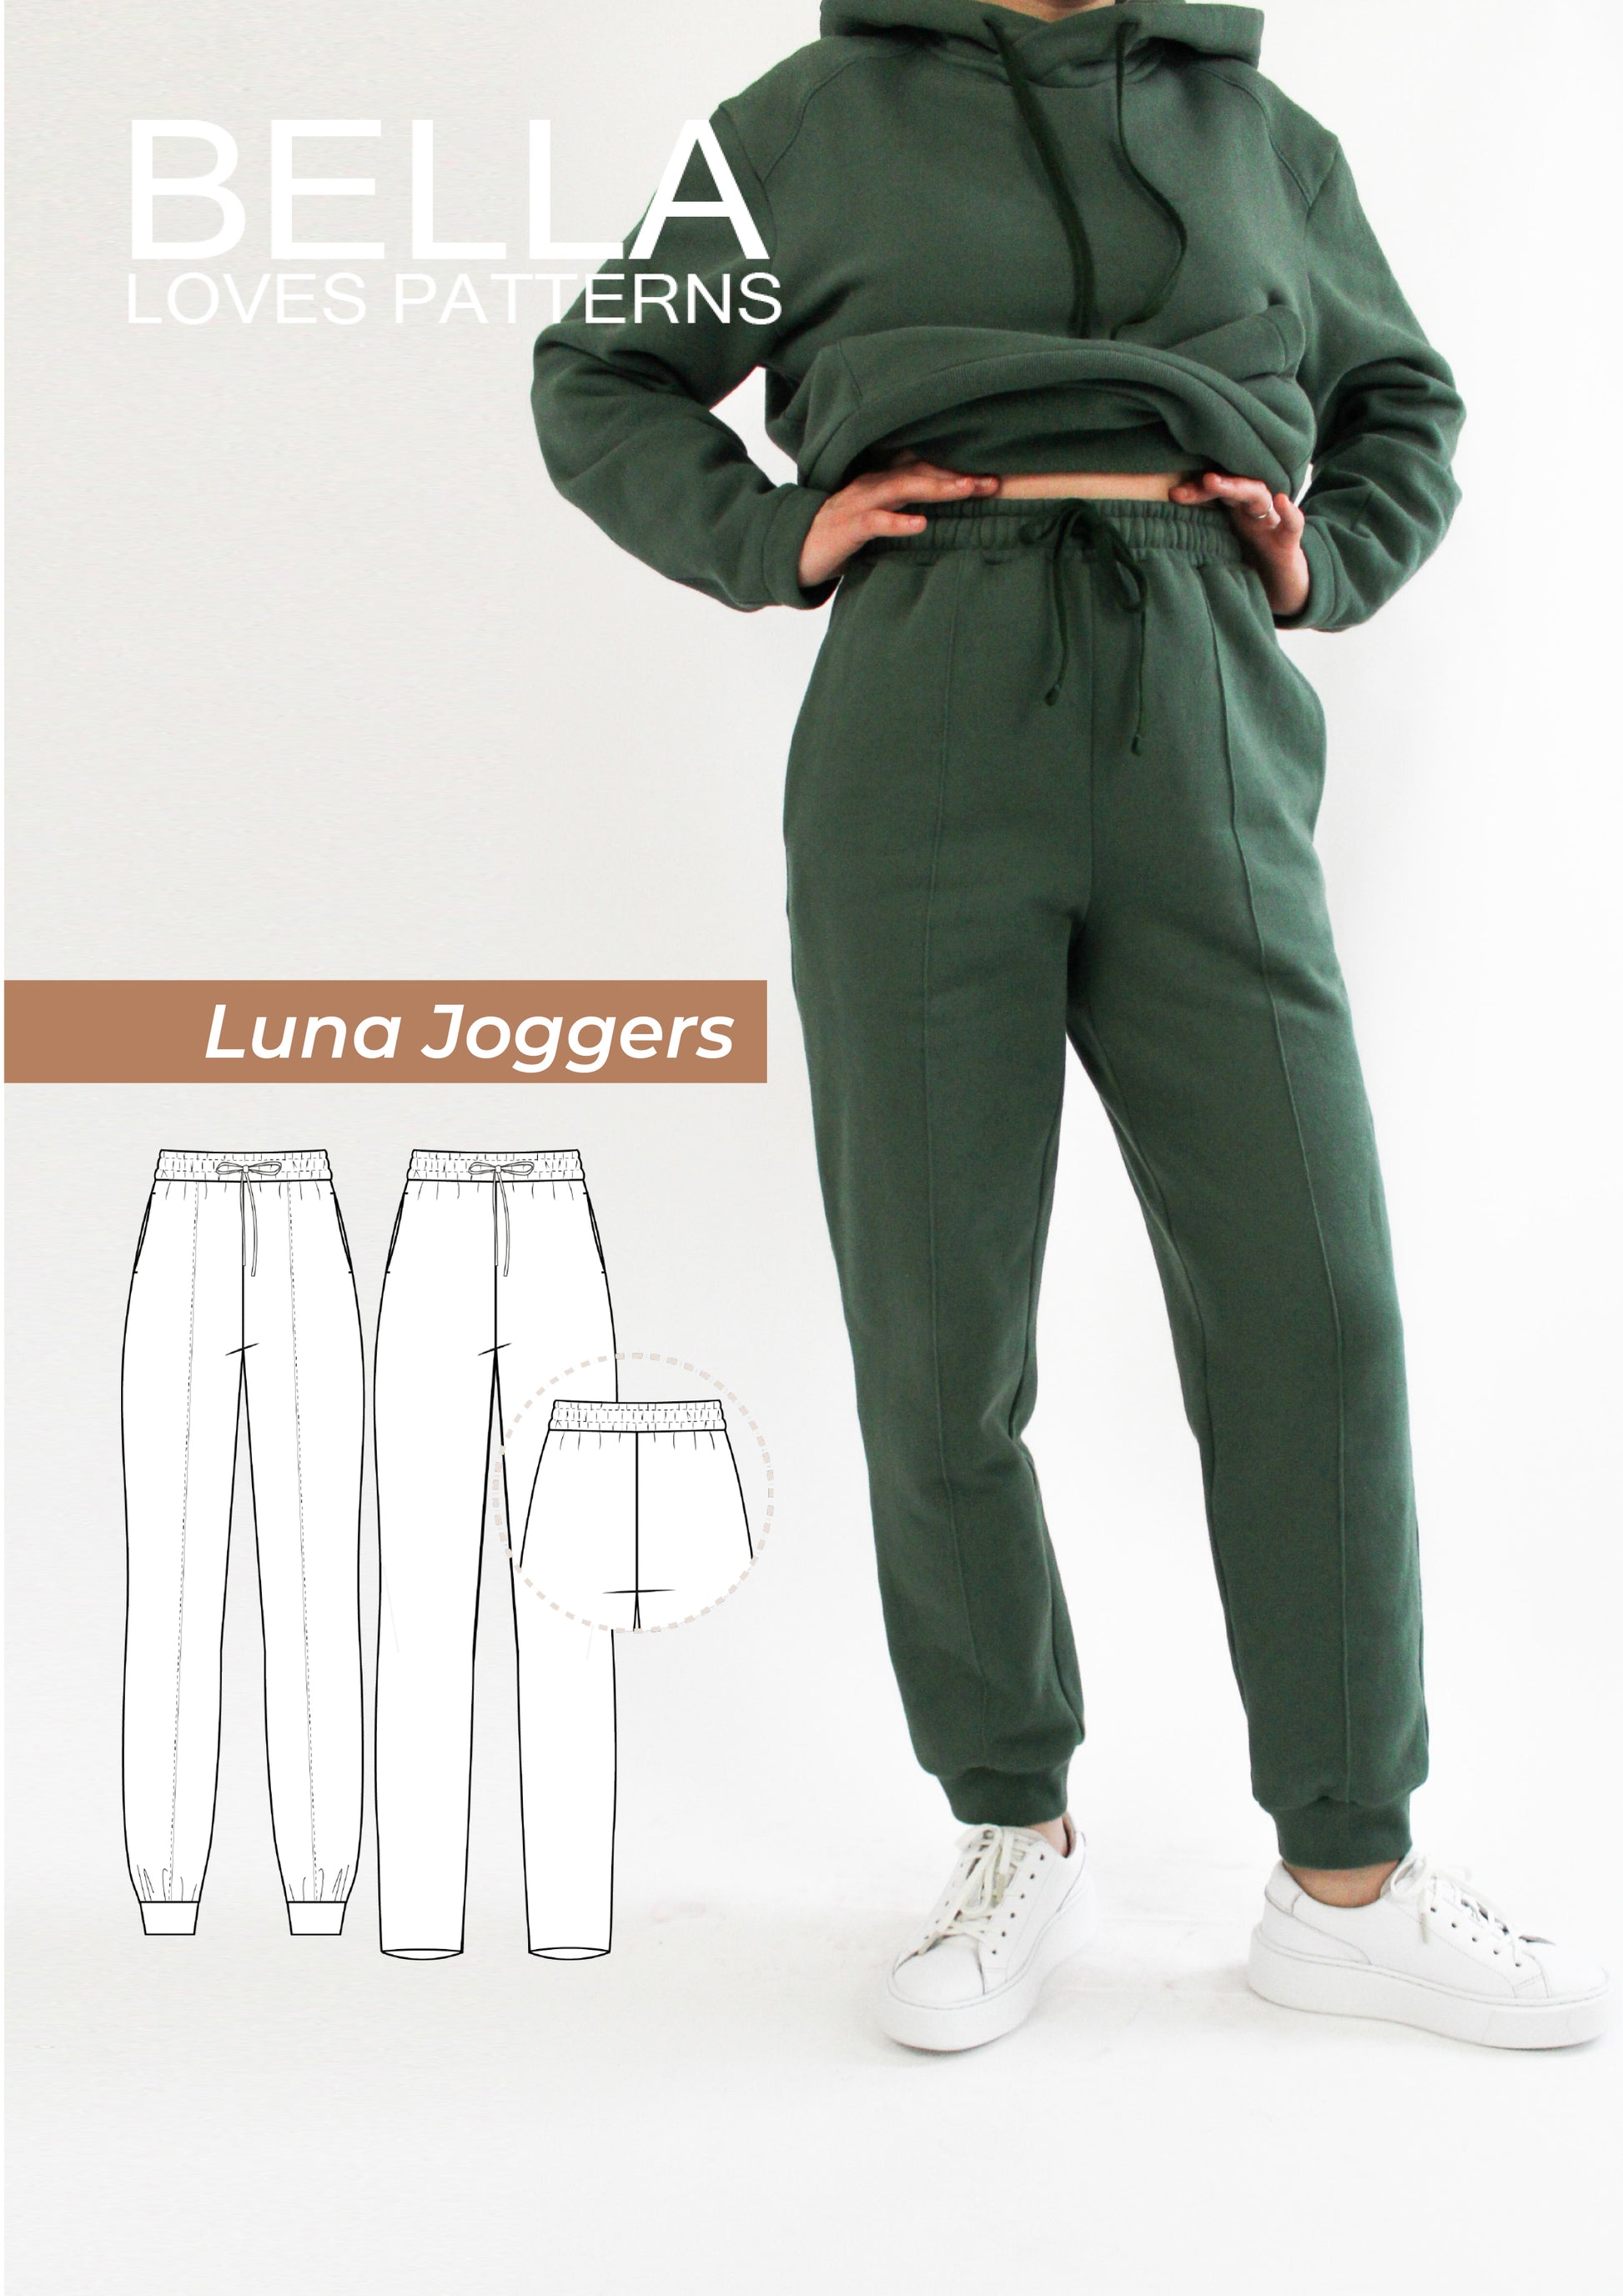 LUNA JOGGERS – PDF SEWING PATTERN - Bella loves patterns